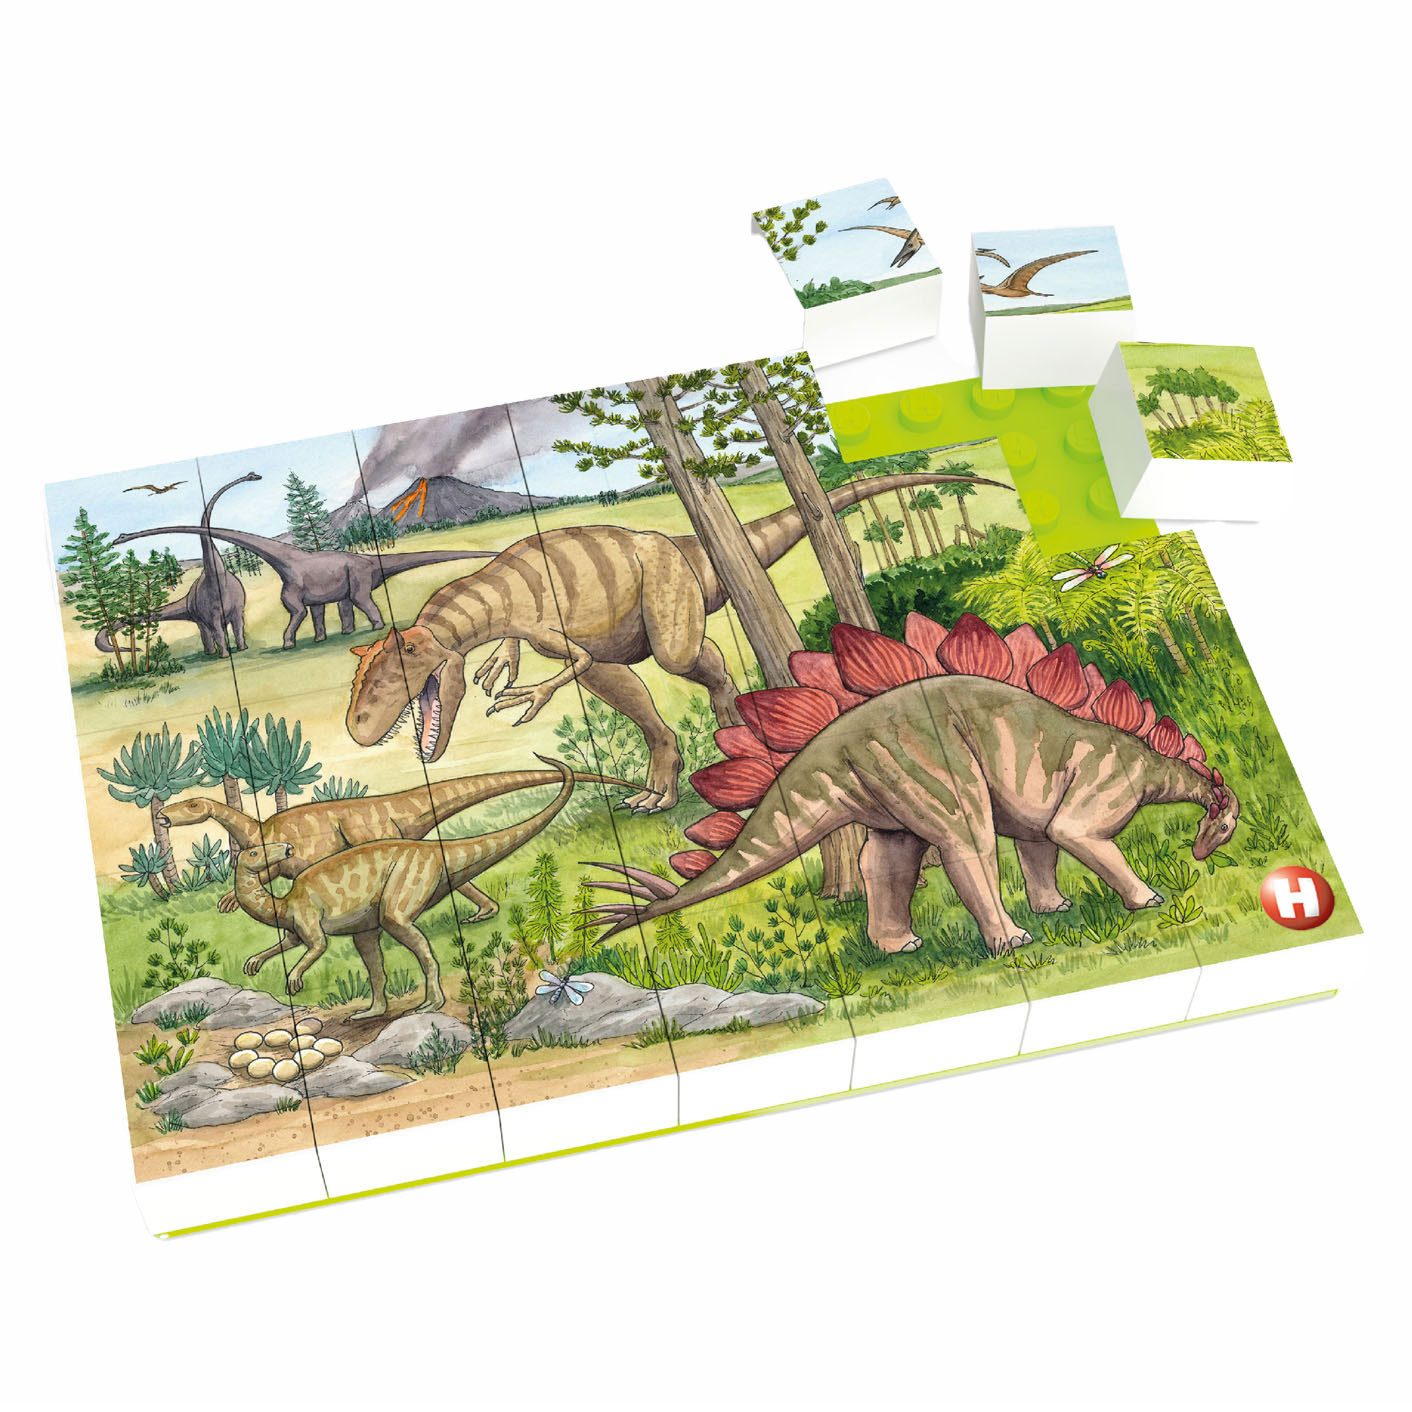 Hubelino Blockpuzzle Dinosaurierwelt, 35 Teile.